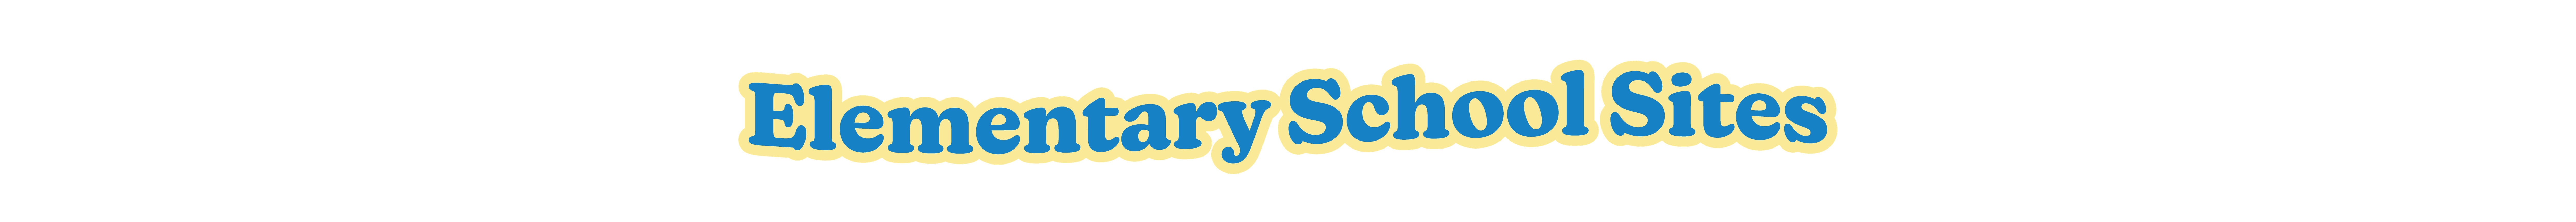 Elementary School Sites-Summer